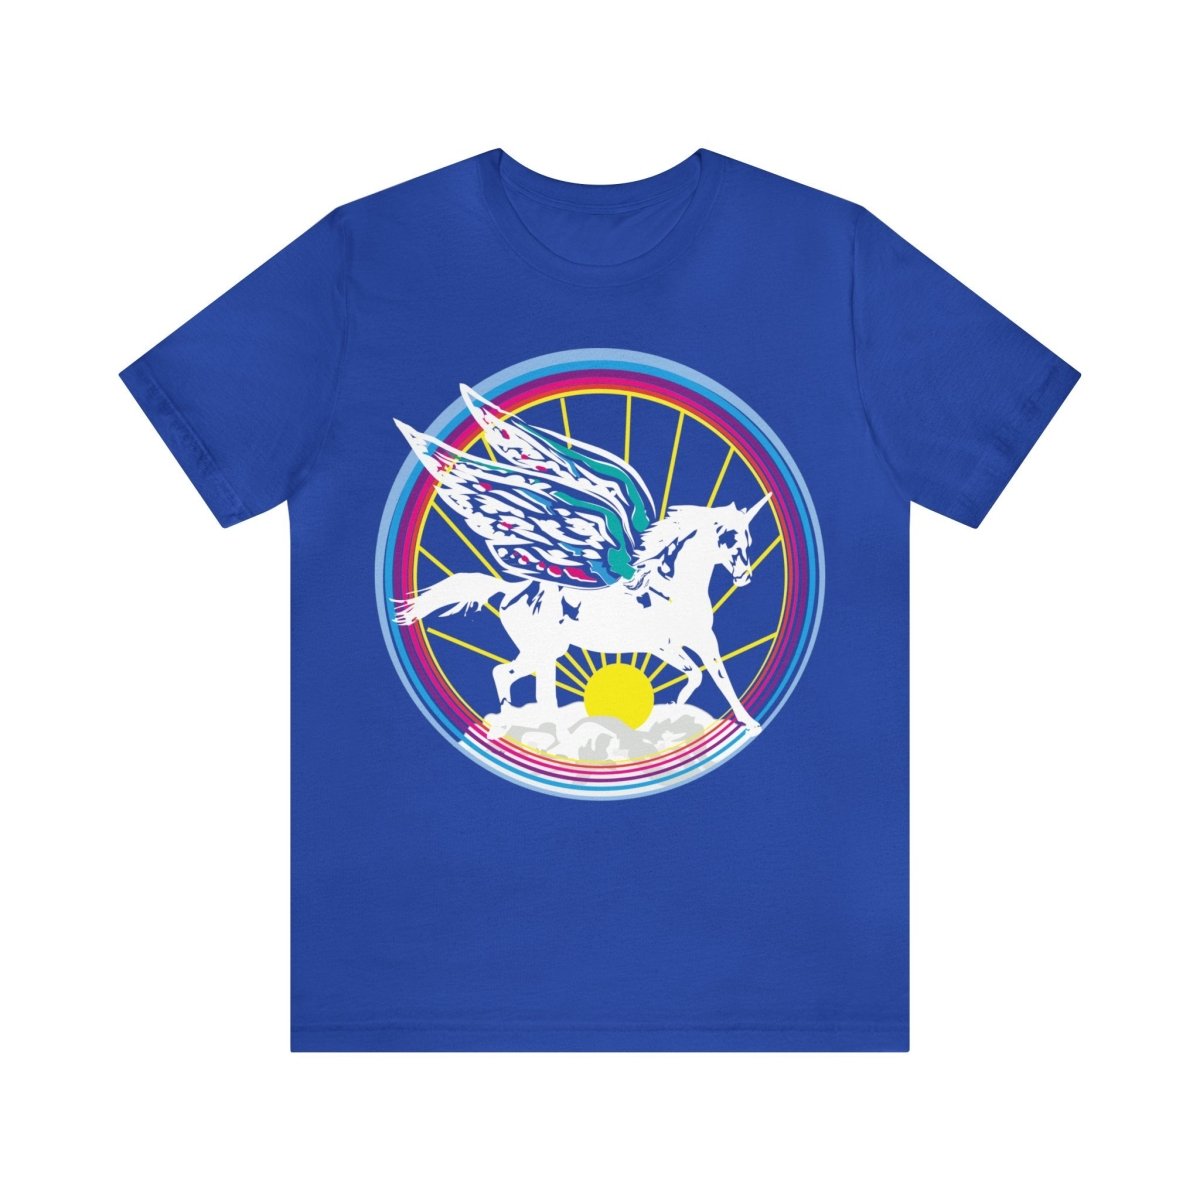 Magic Flying Unicorn Premium T-Shirt, Fairy Wings, Lucky Fairytale Rainbow, Inspire Unique Fantasy